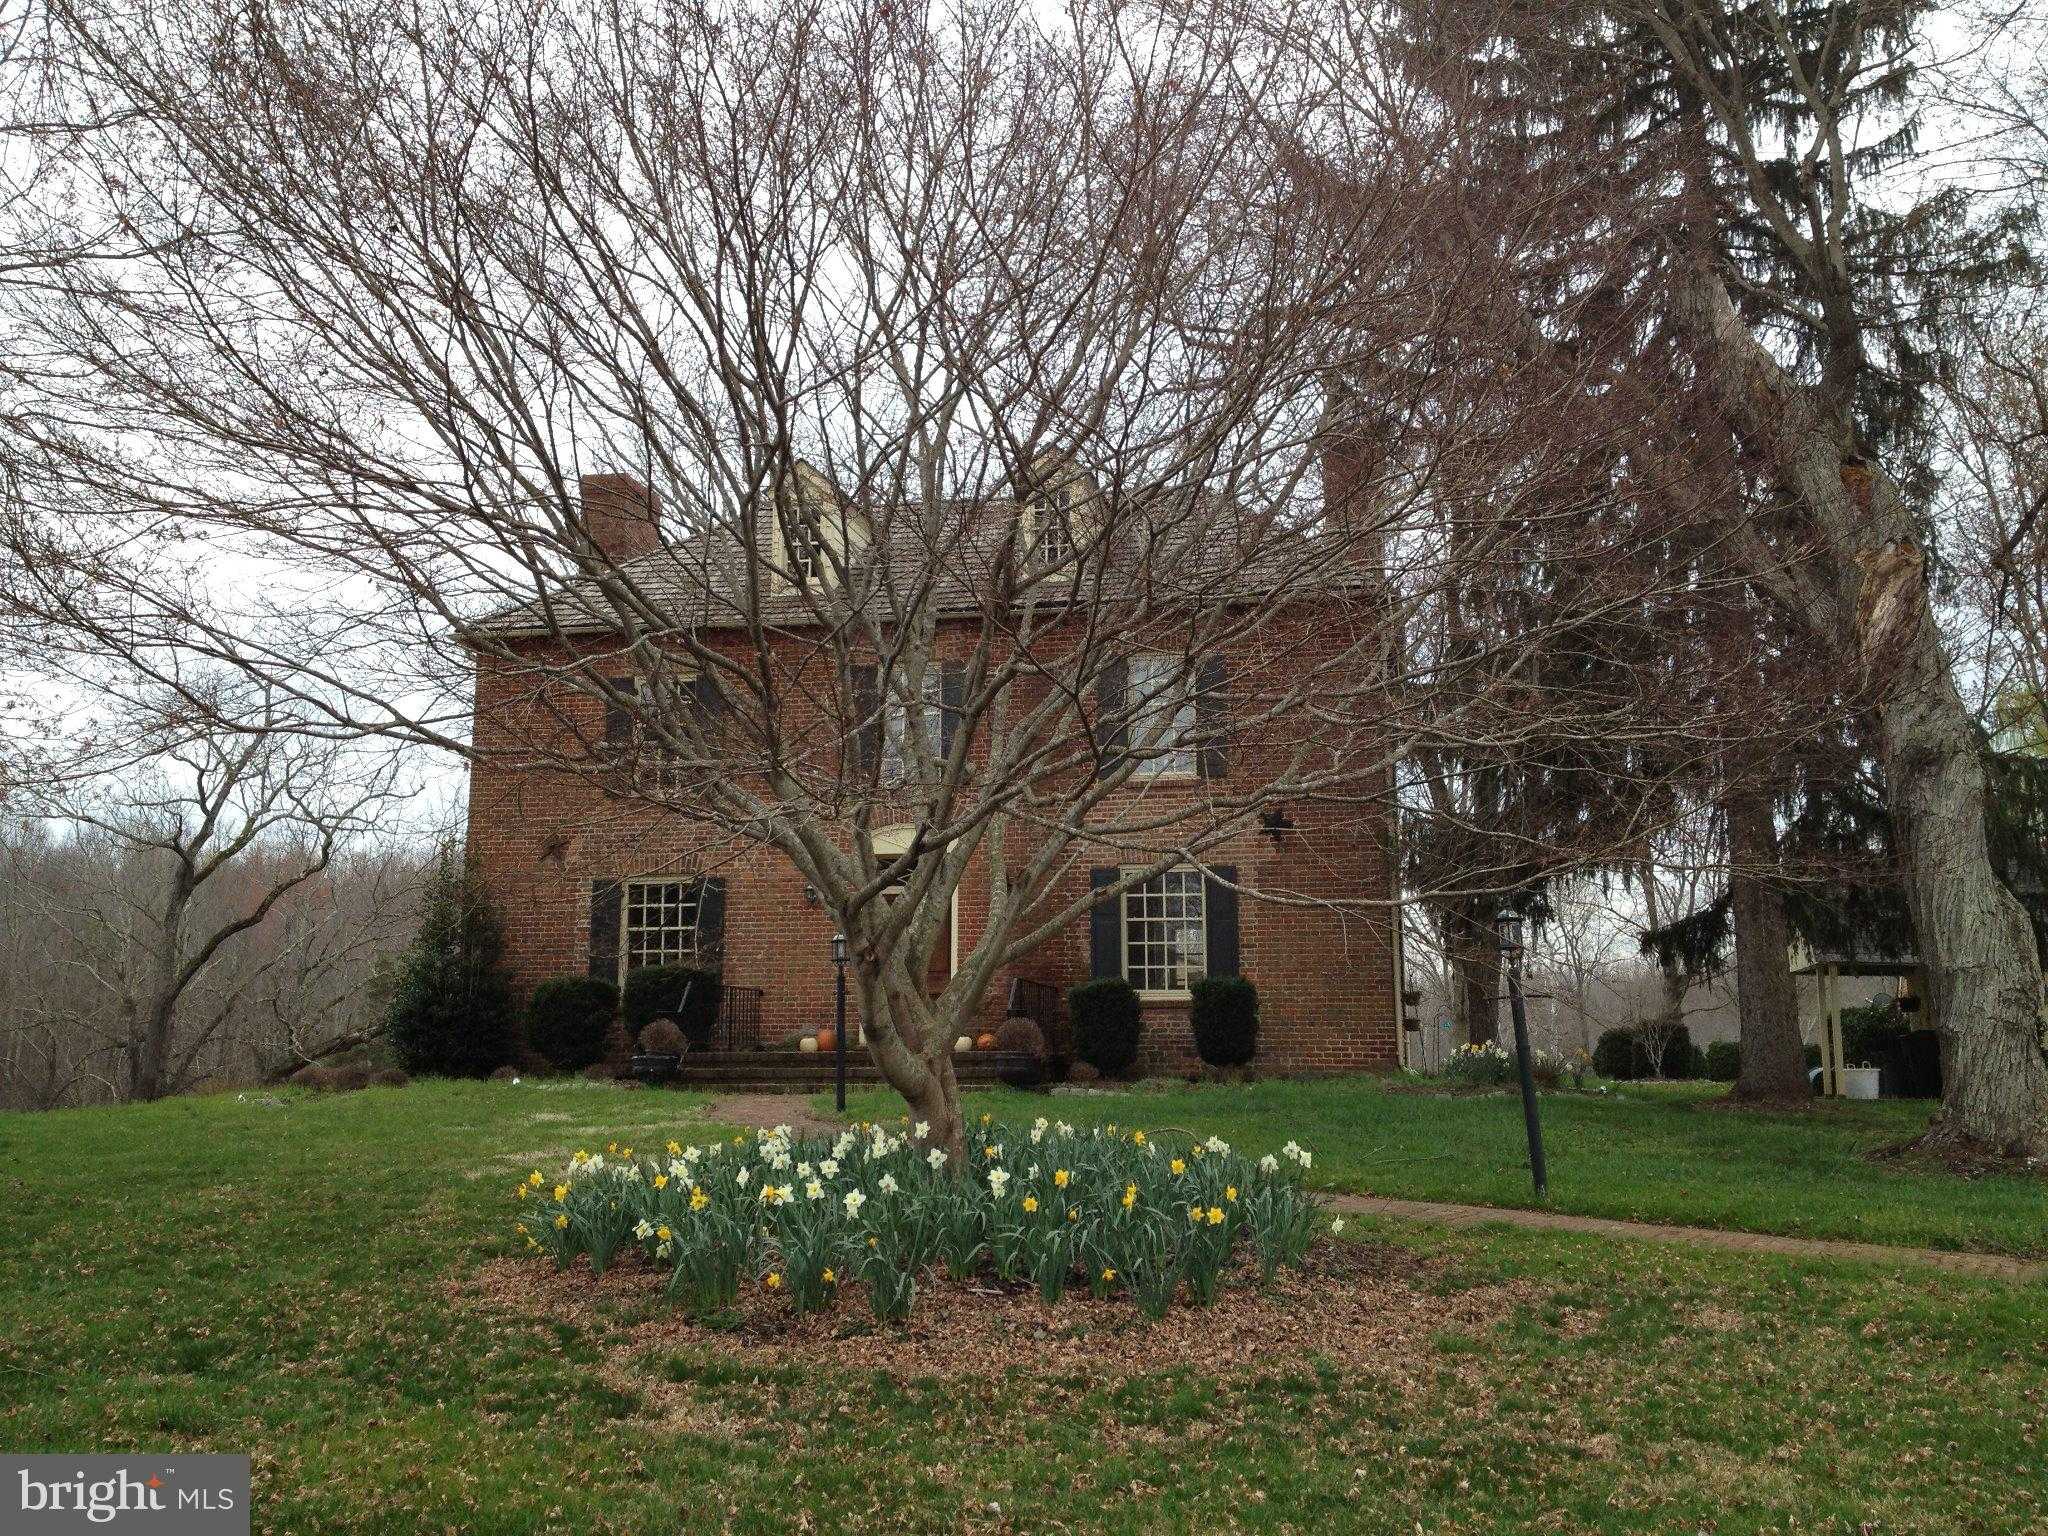 Photo 1 of 44 of 1791 WARRENTON ROAD house